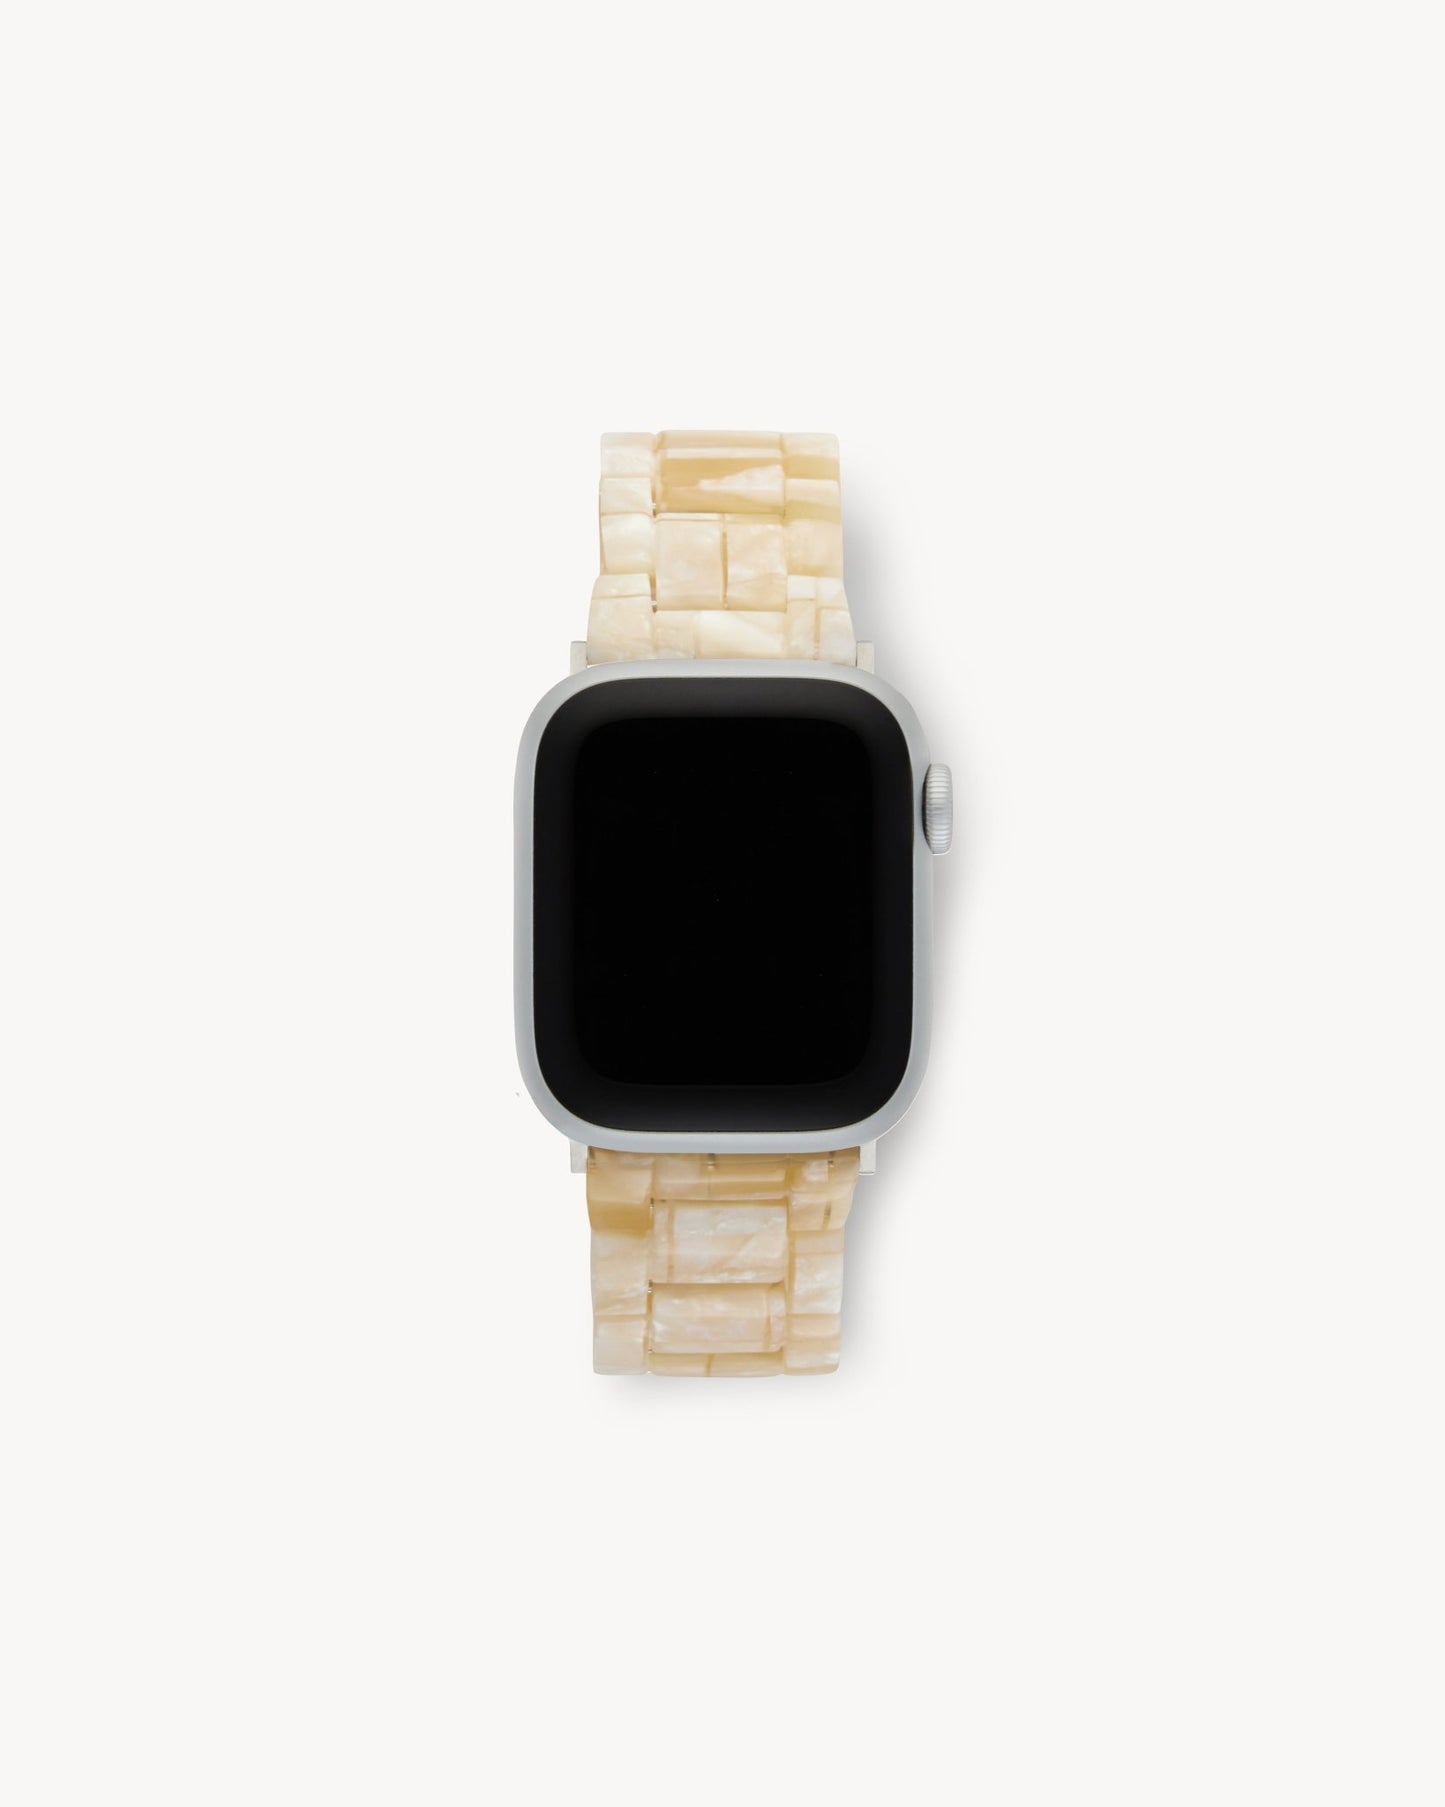 MACHETE Apple Watch Band in Sea Shell Checker